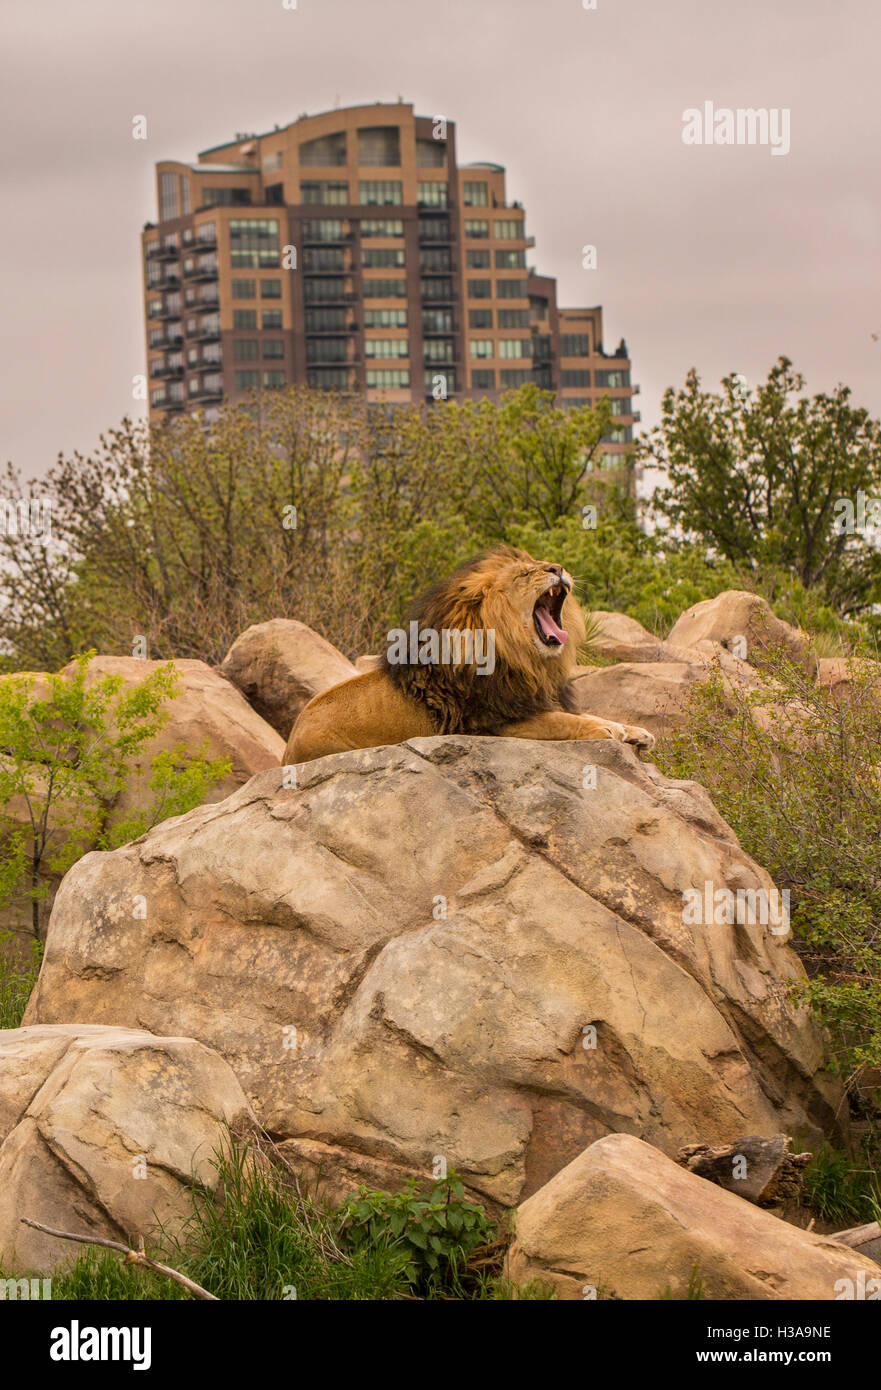 A Lion Yawning Near The City Stock Photo